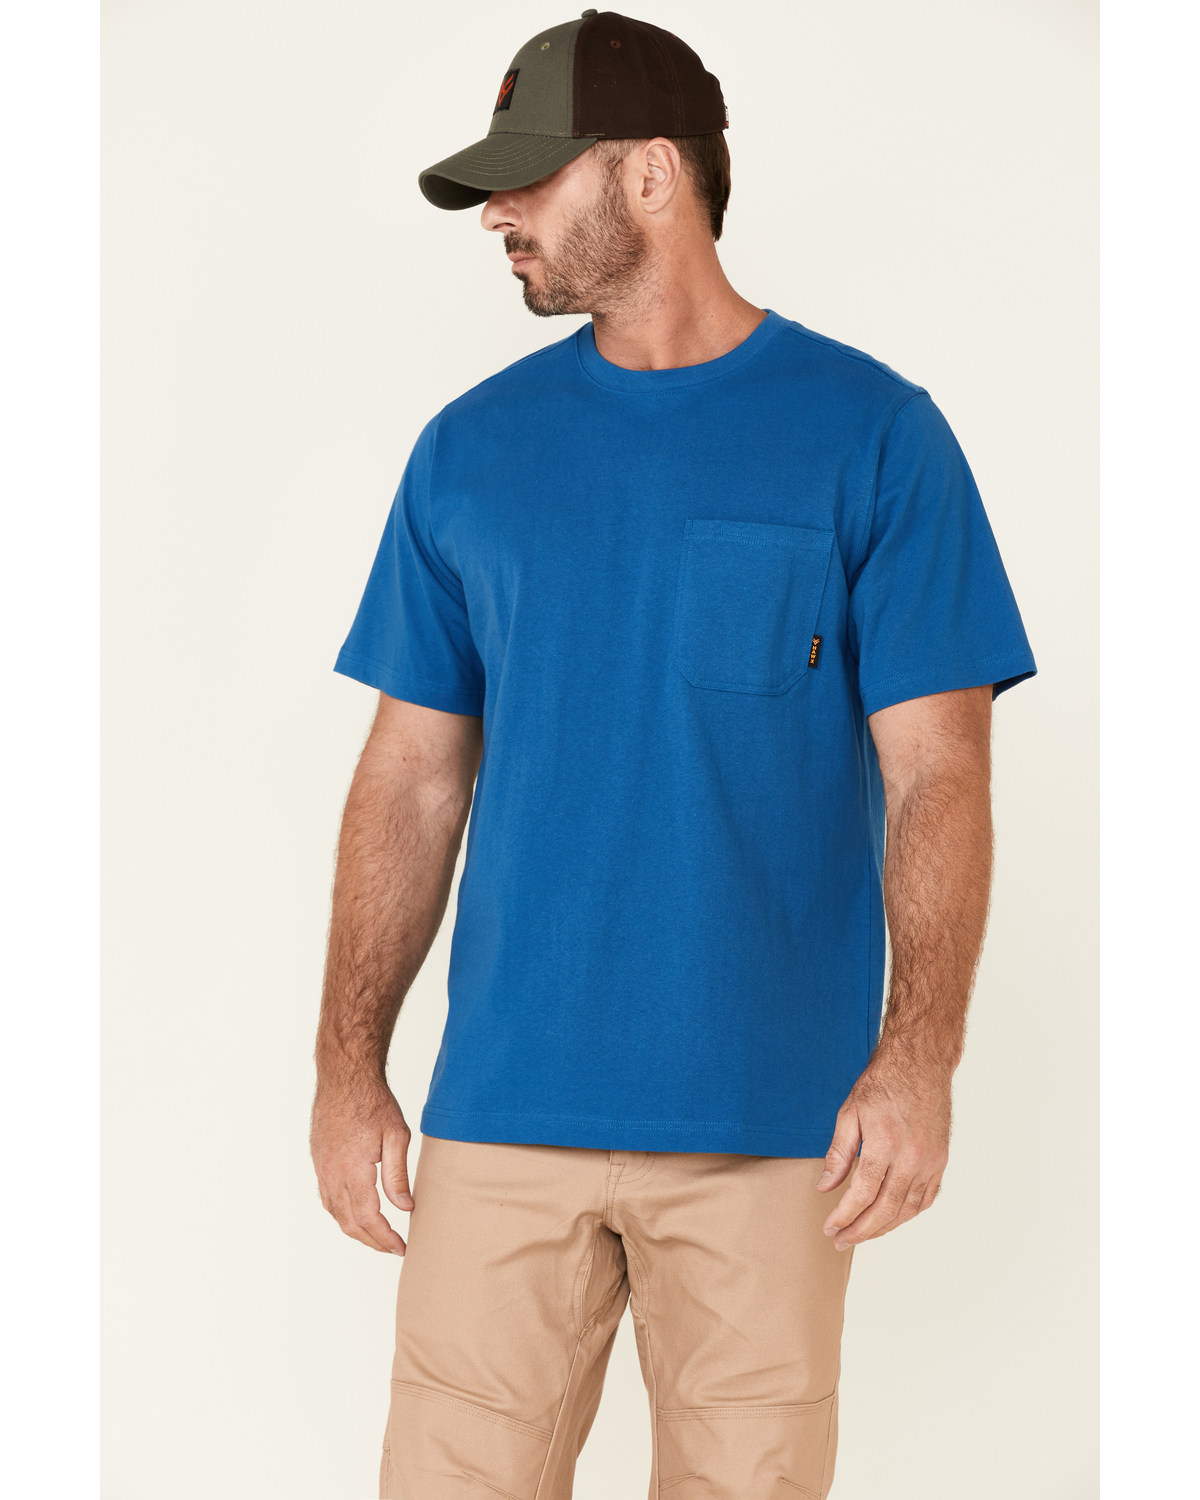 Hawx Men's Forge Short Sleeve Work Pocket T-Shirt